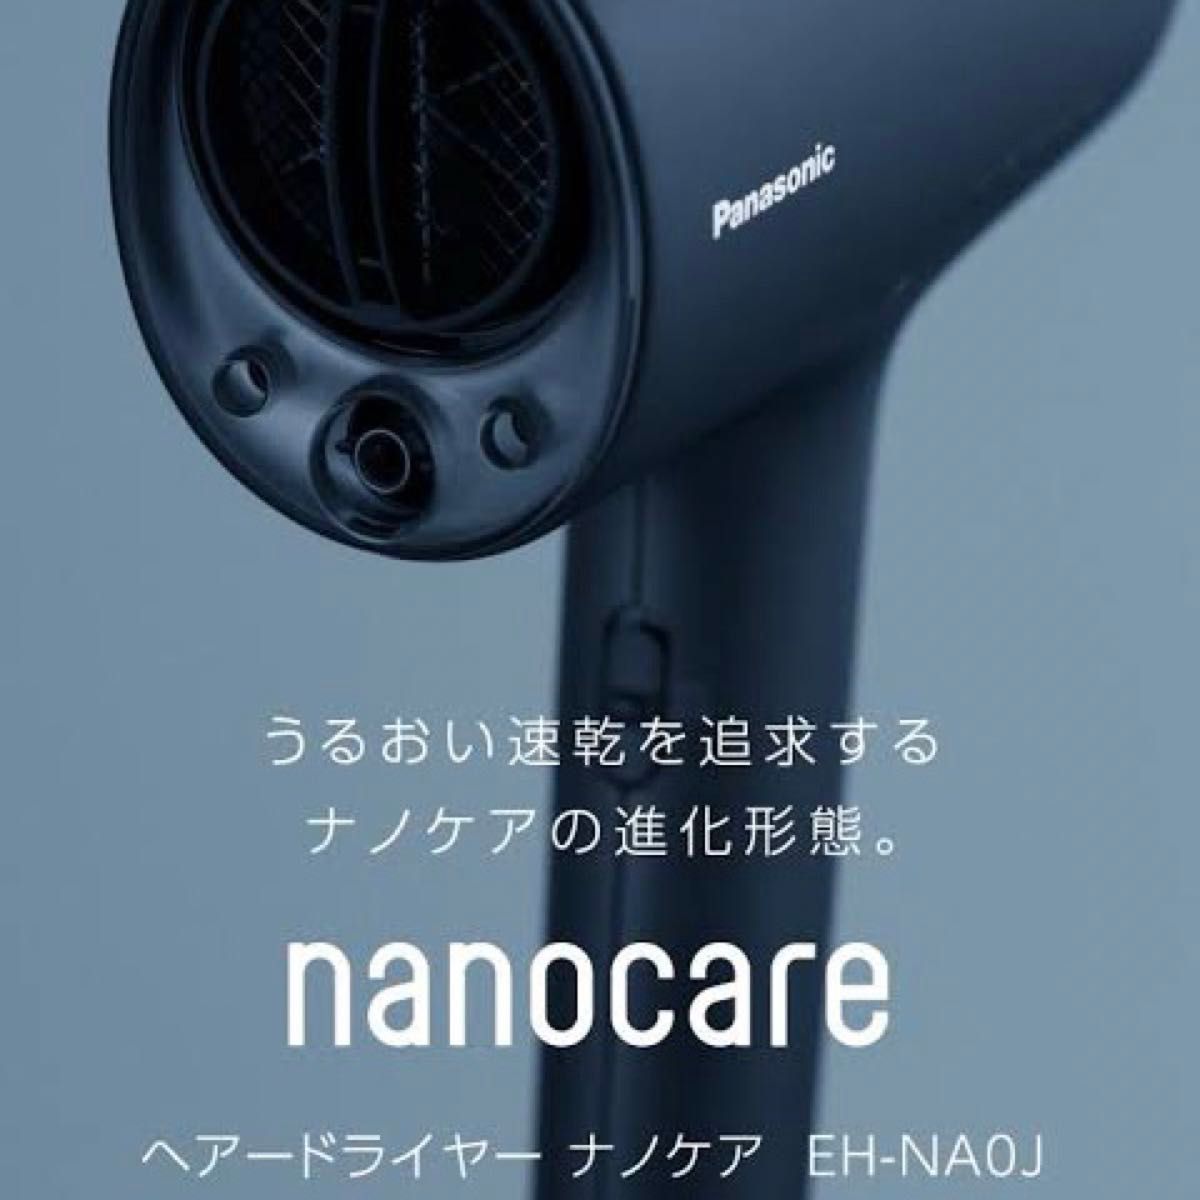 Panasonic ヘアードライヤー nanocare EH-NA0J ディープネイビー 